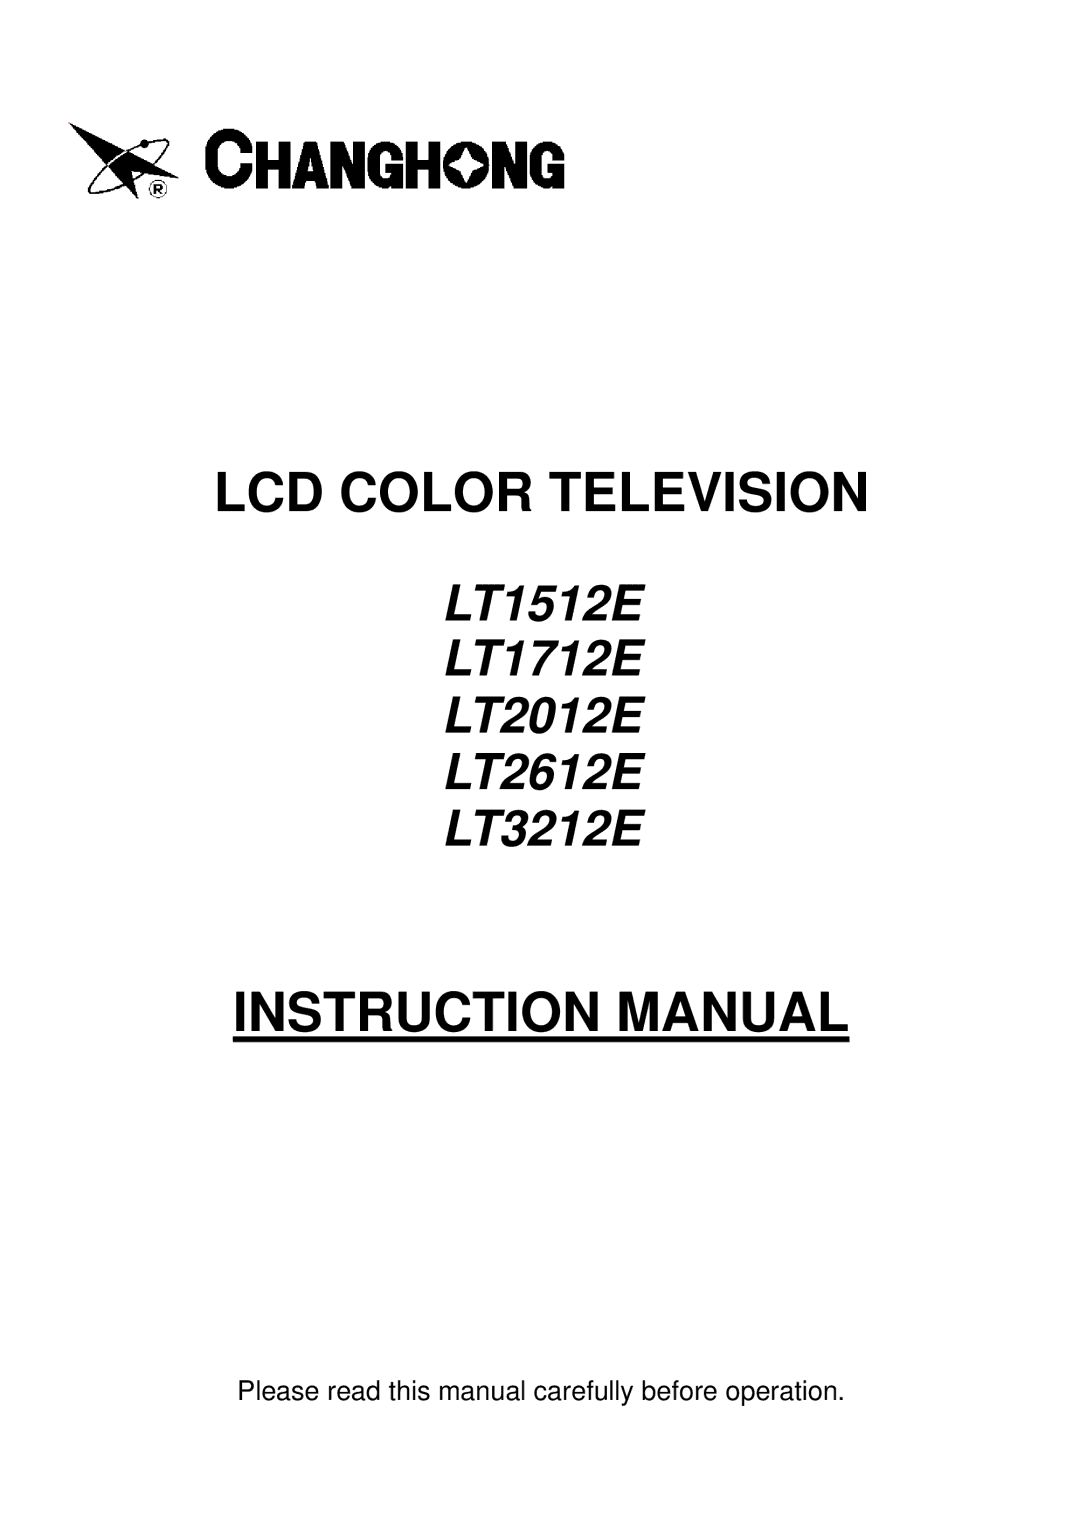 Changhong Electric LT1512E, LT1712E, LT2012E, LT2612E, LT3212E manual LCD Color Television 